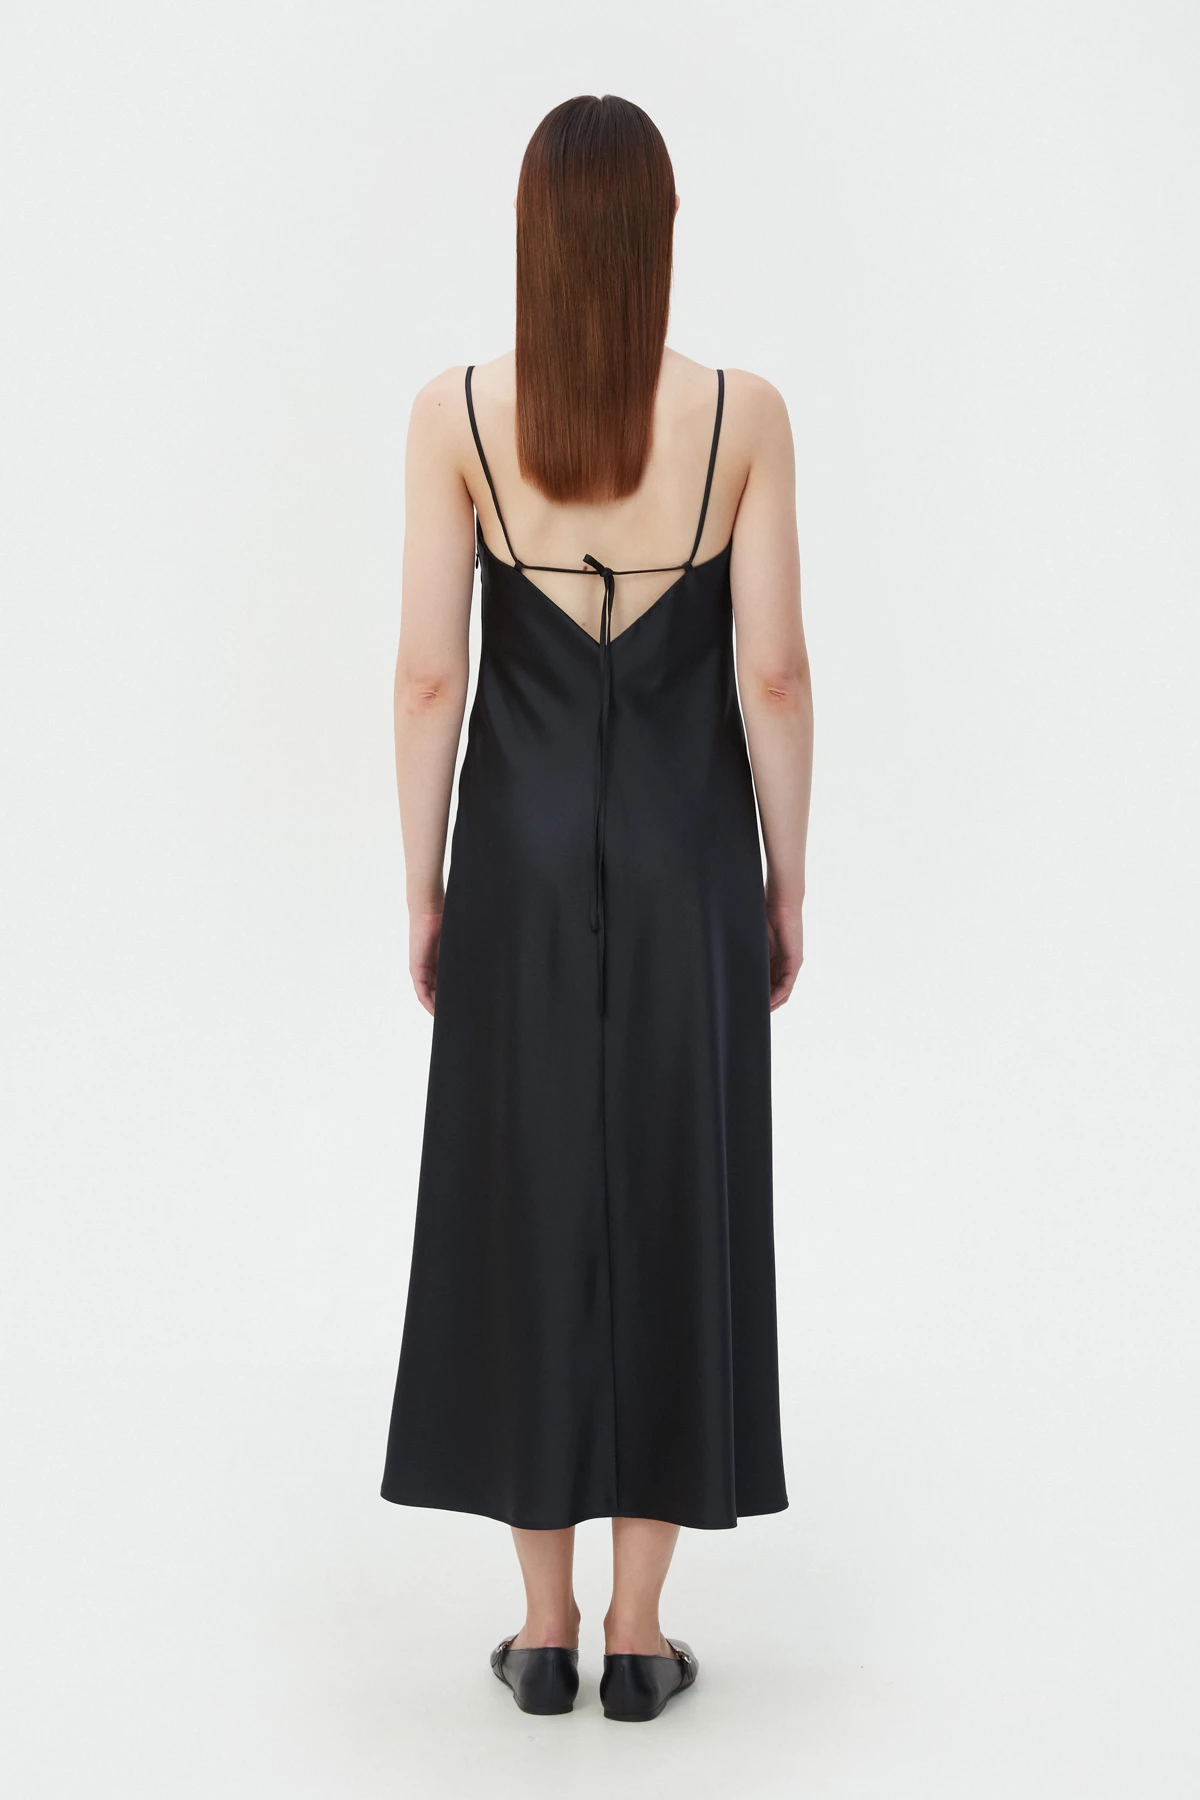 Black satin open-back dress, photo 4